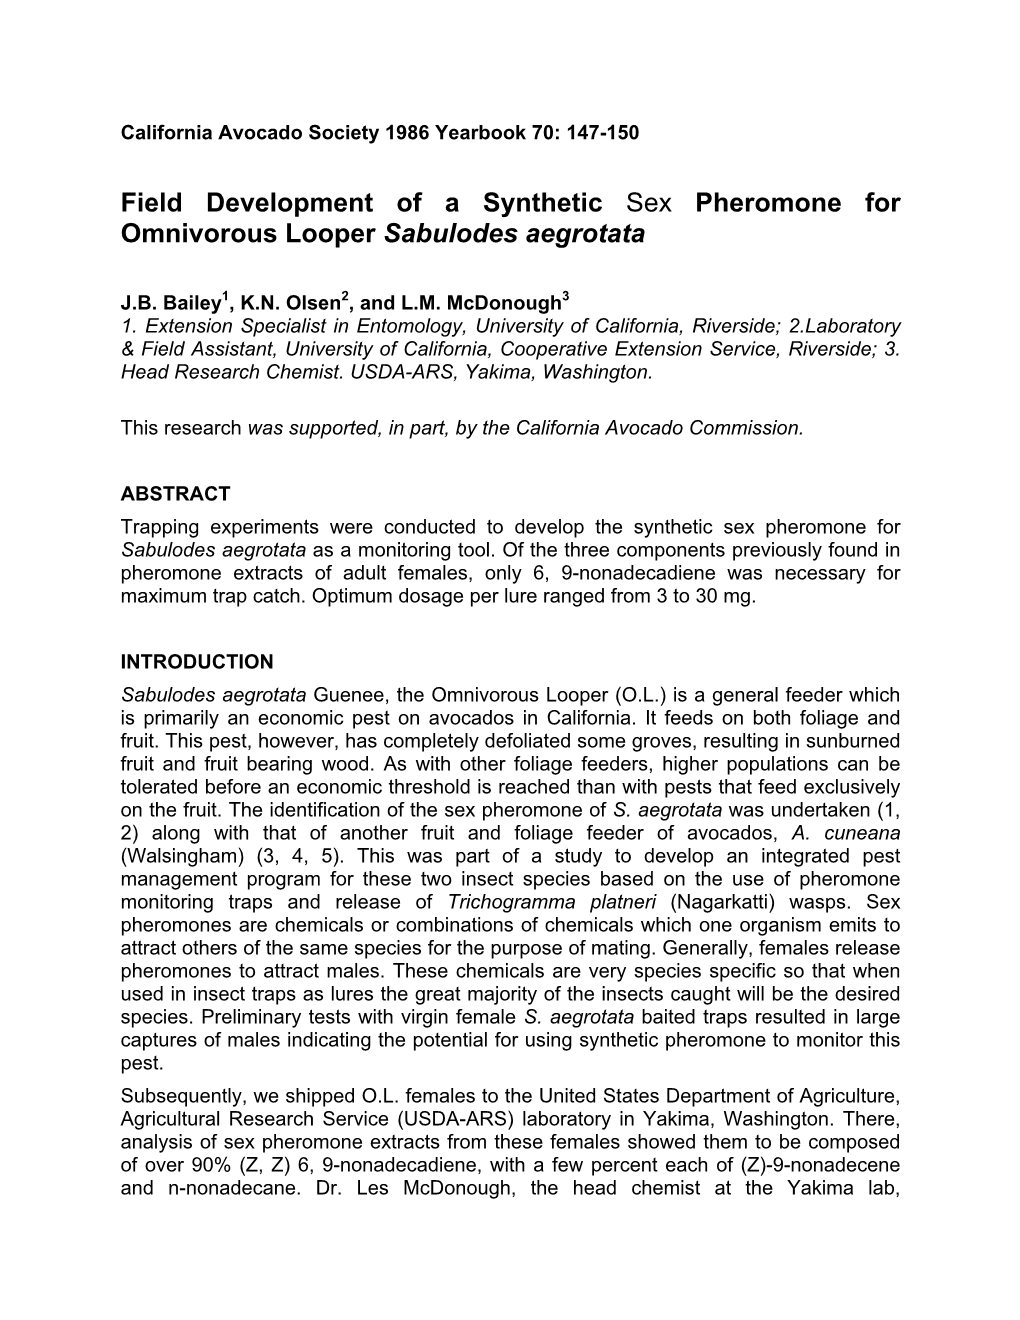 Field Development of a Synthetic Sex Pheromone for Omnivorous Looper Sabulodes Aegrotata